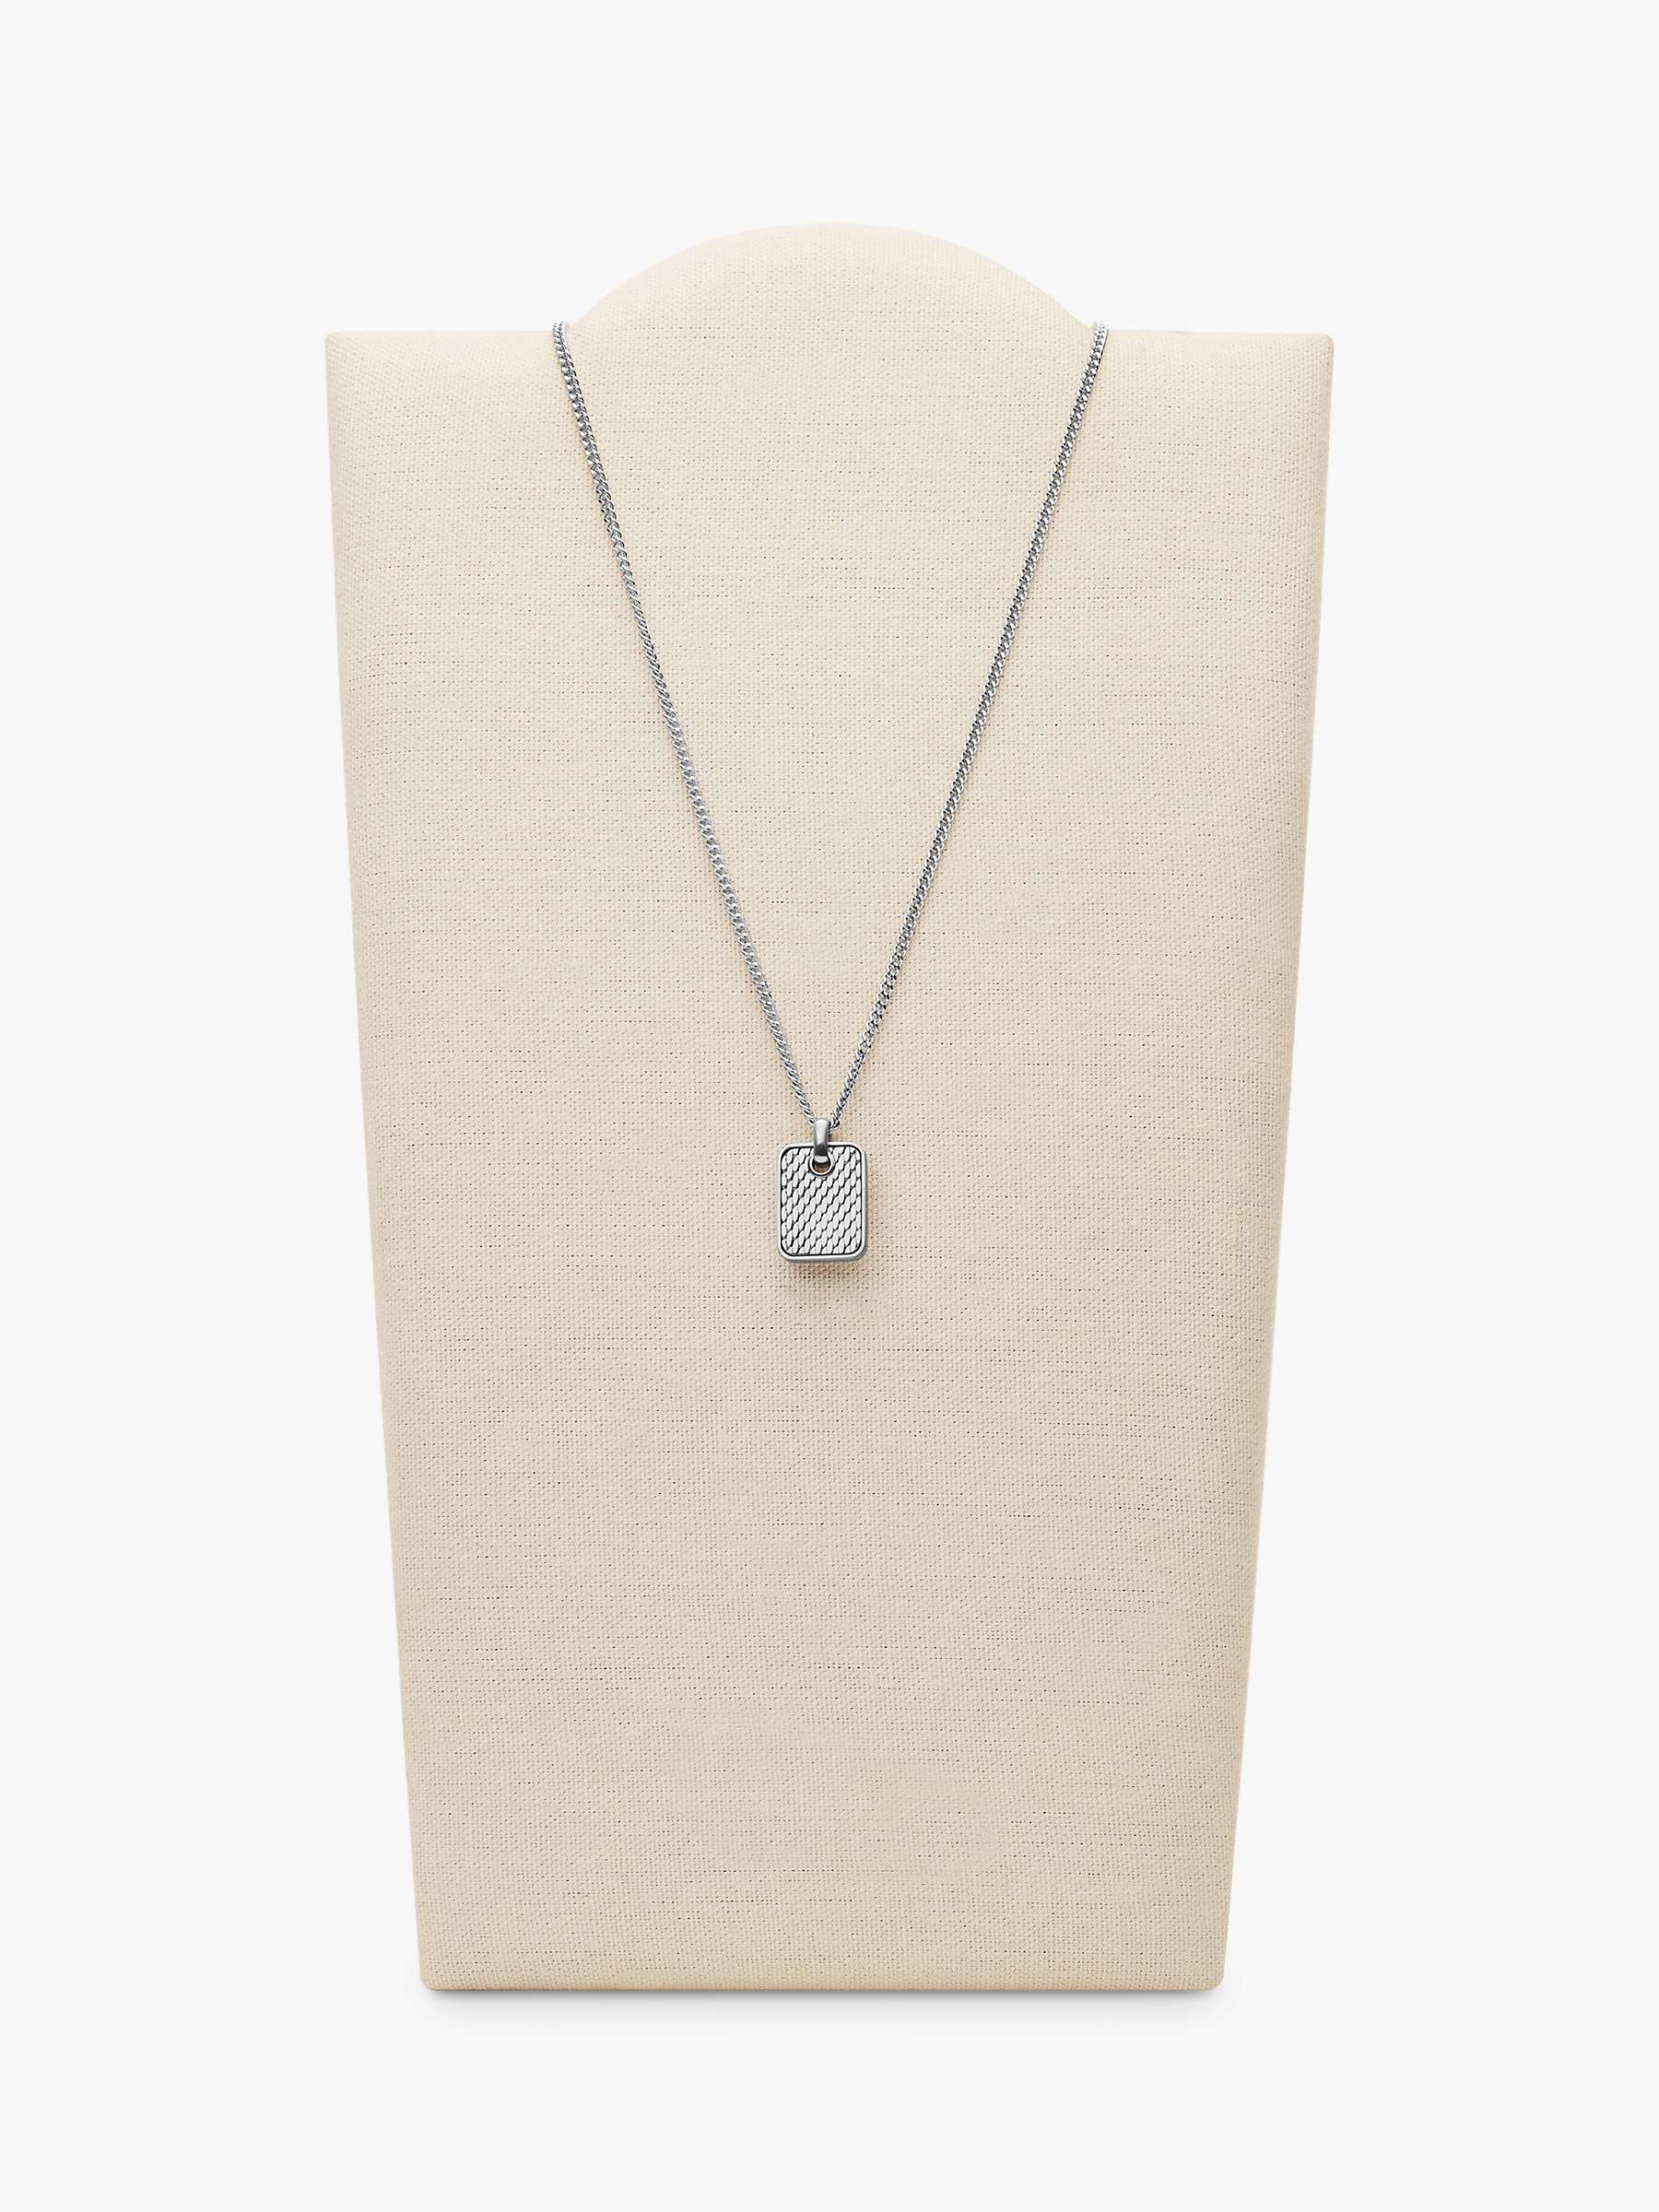 Buy Skagen Men's Textured Pendant Necklace, Silver Online at johnlewis.com